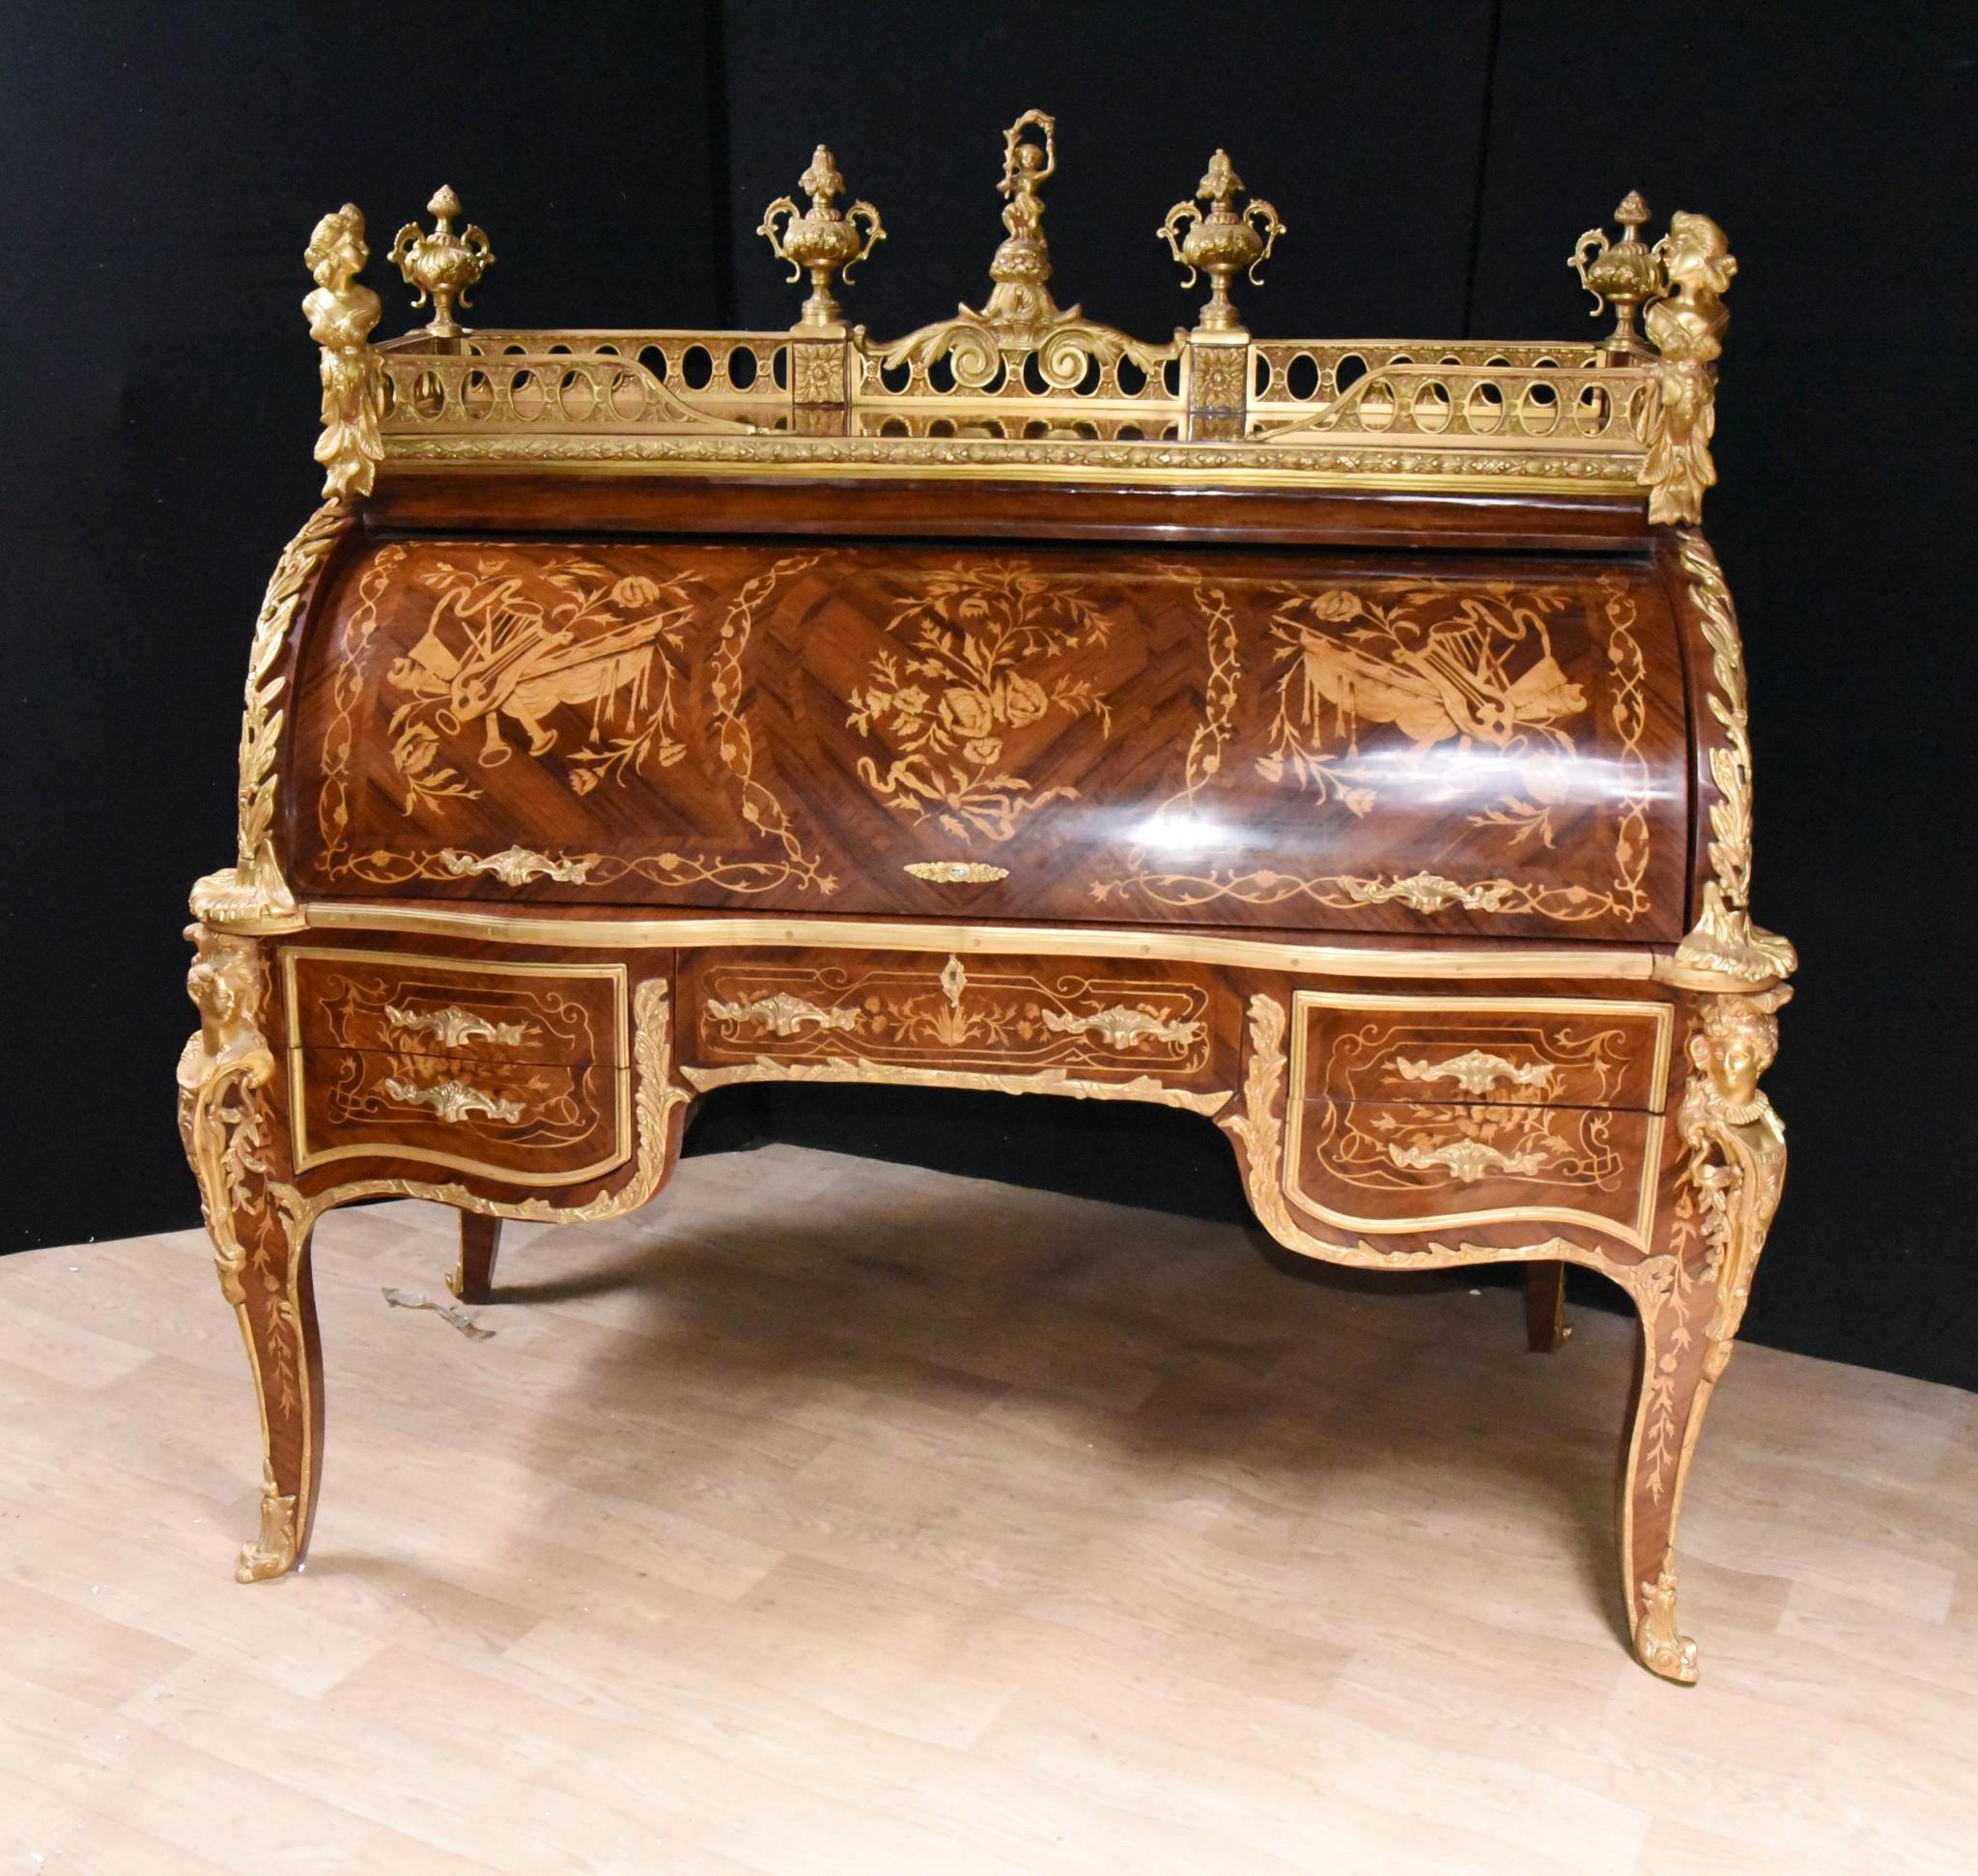 Kingwood Bureau De Roi, French Roll Top Desk Louis XV Monumental For Sale